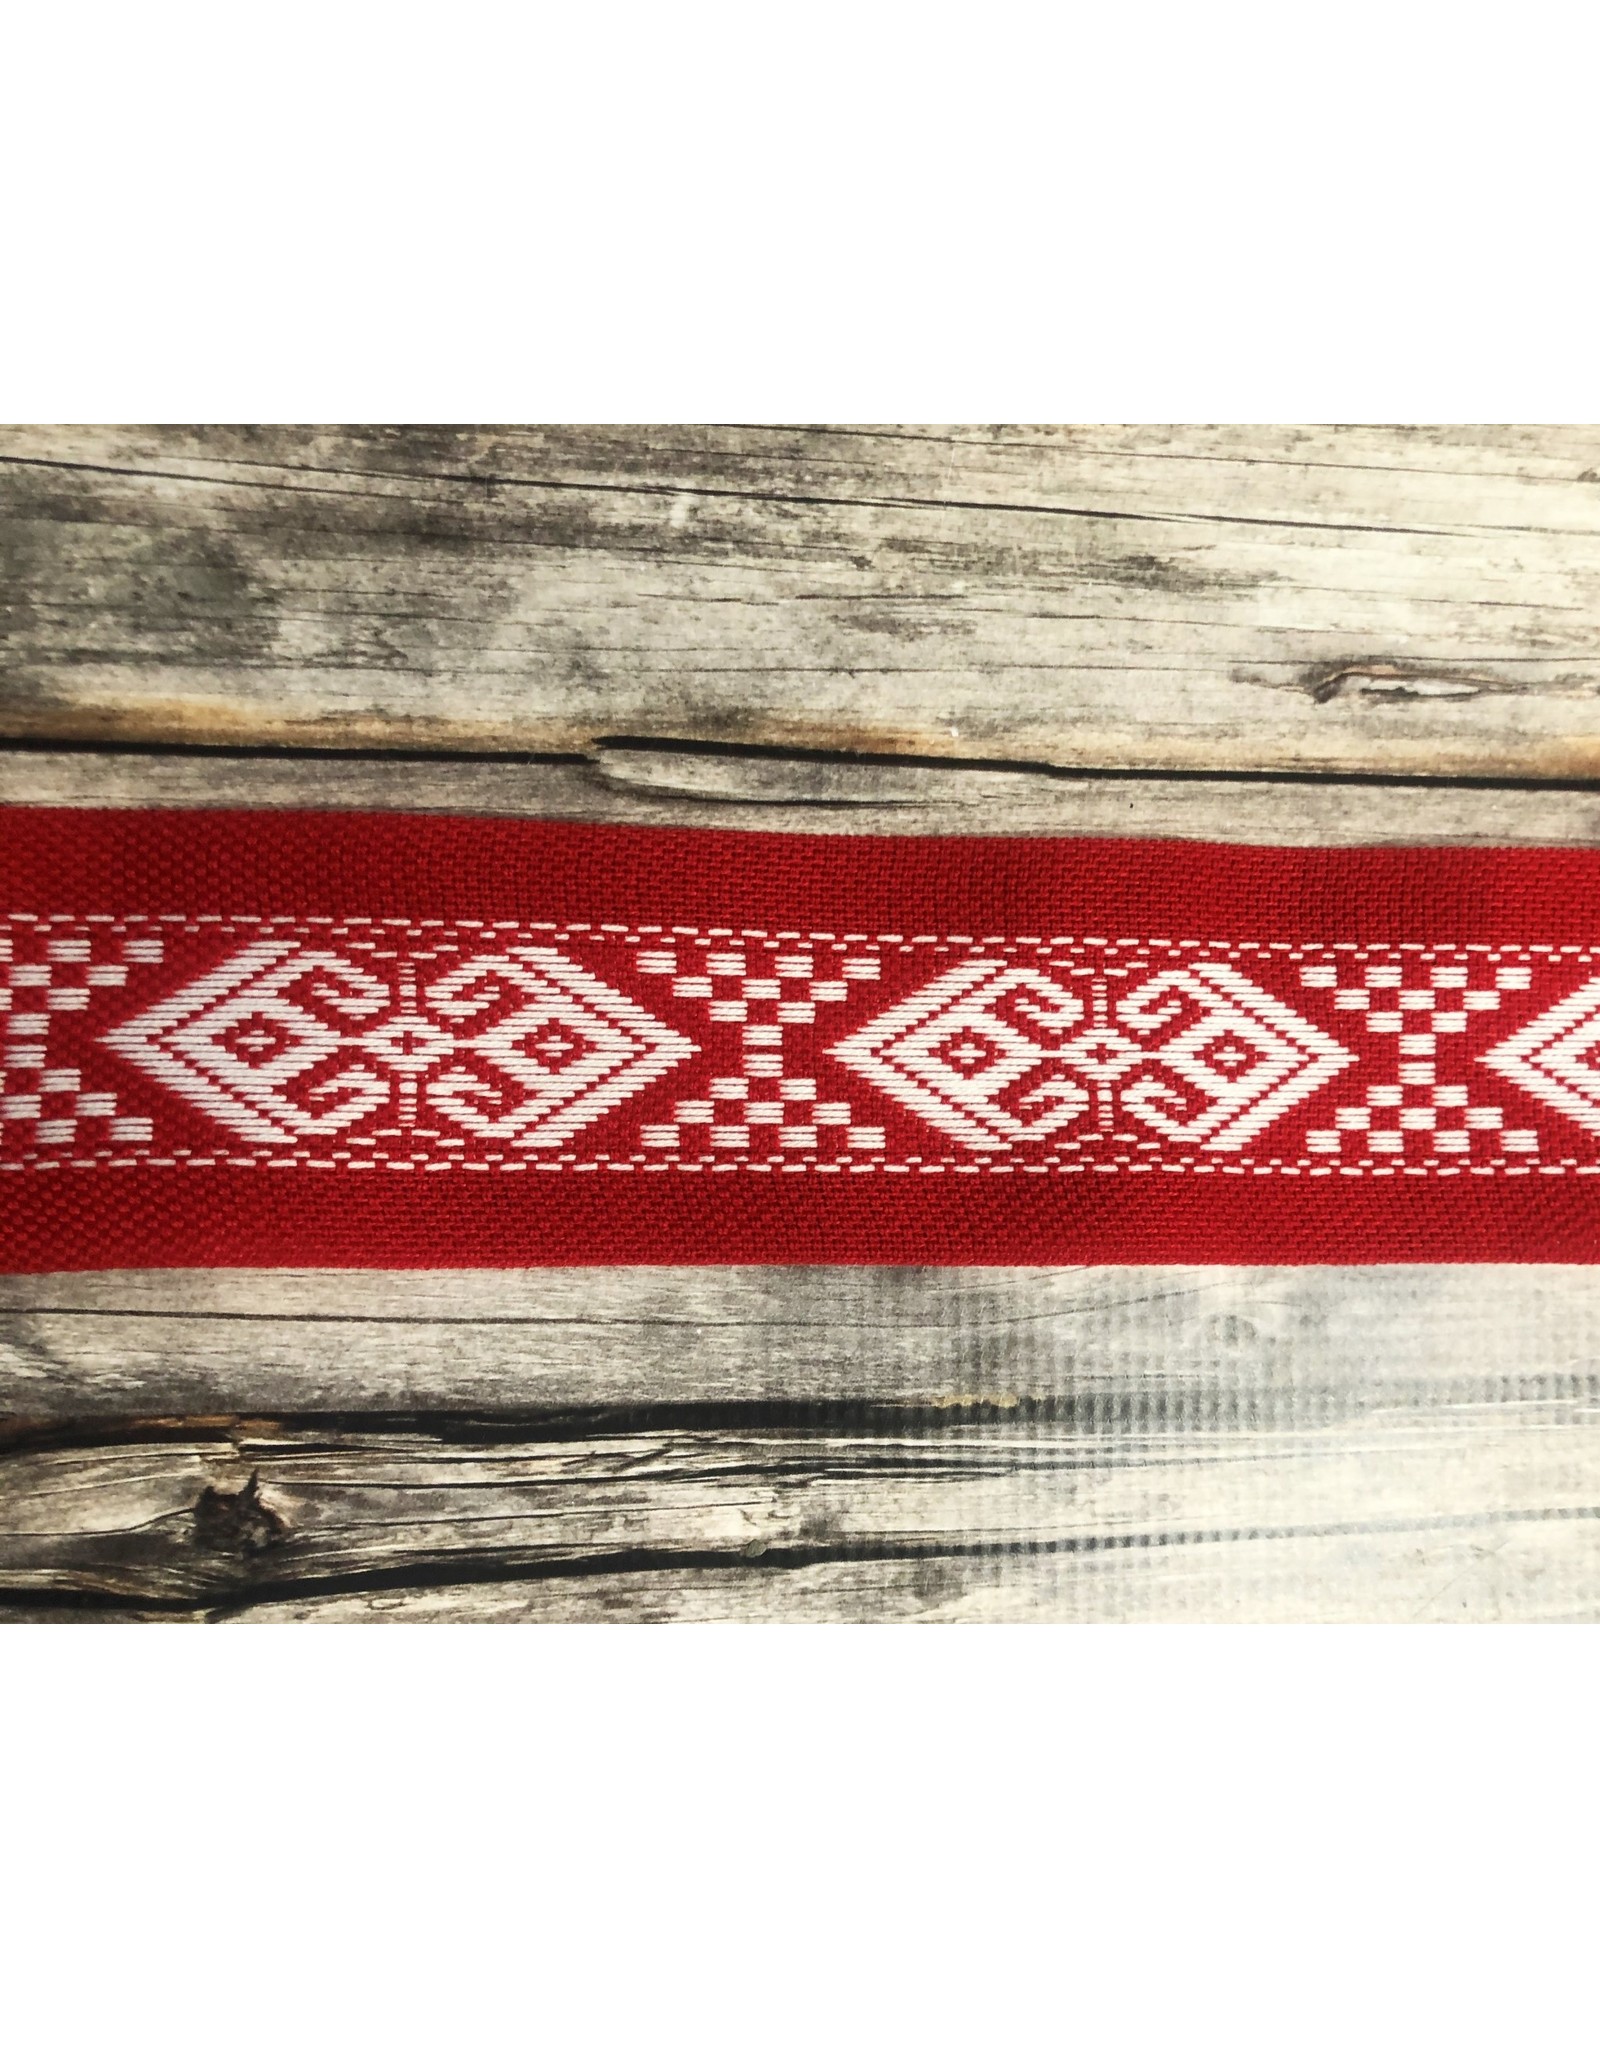 Slavic Folk Art Ribbon White on Red